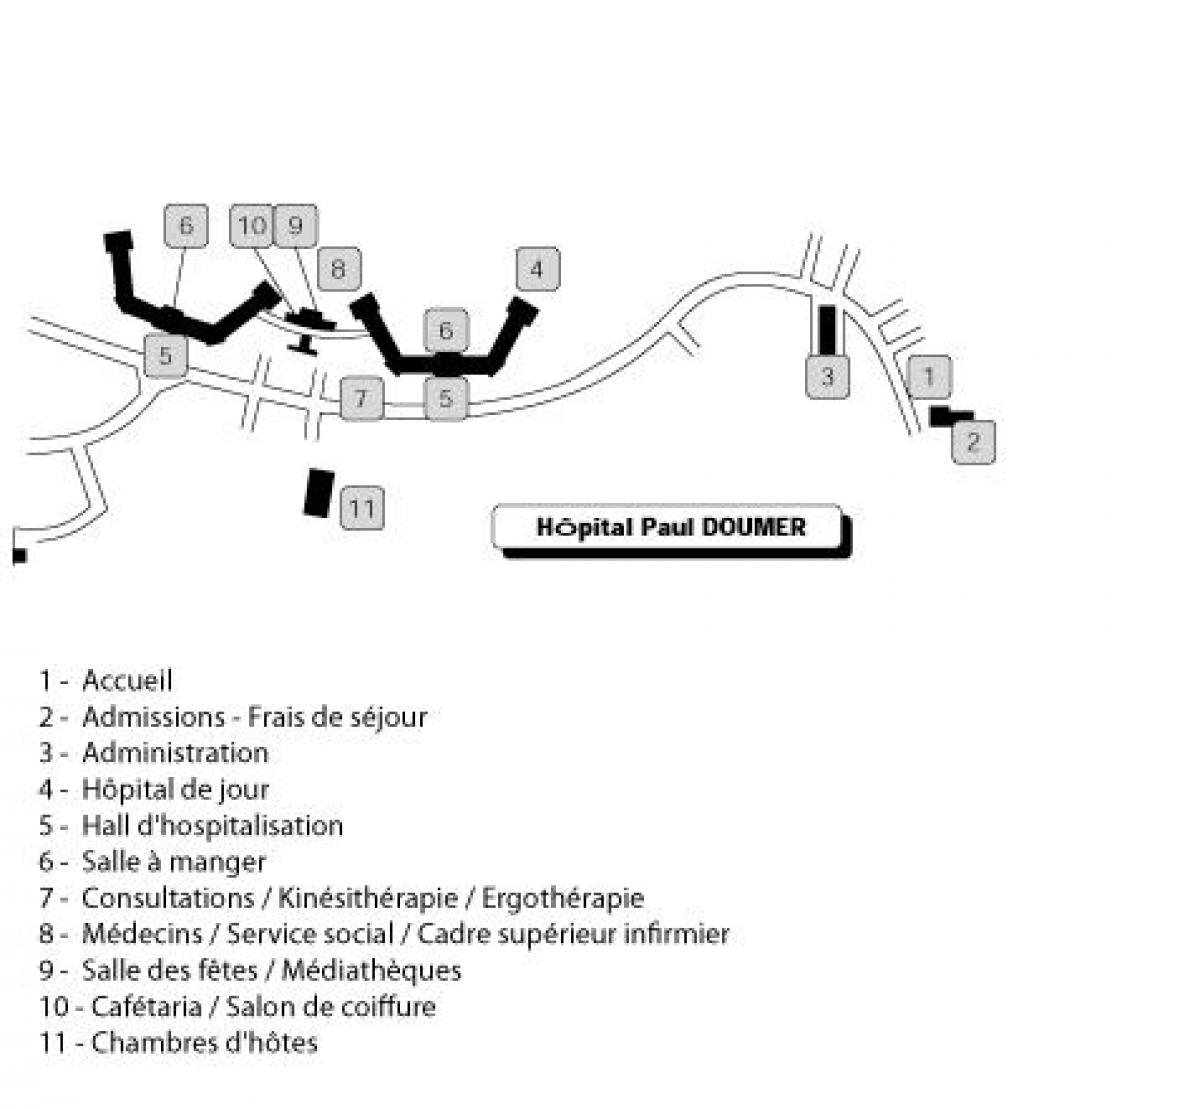 Картата болница Пол Думер